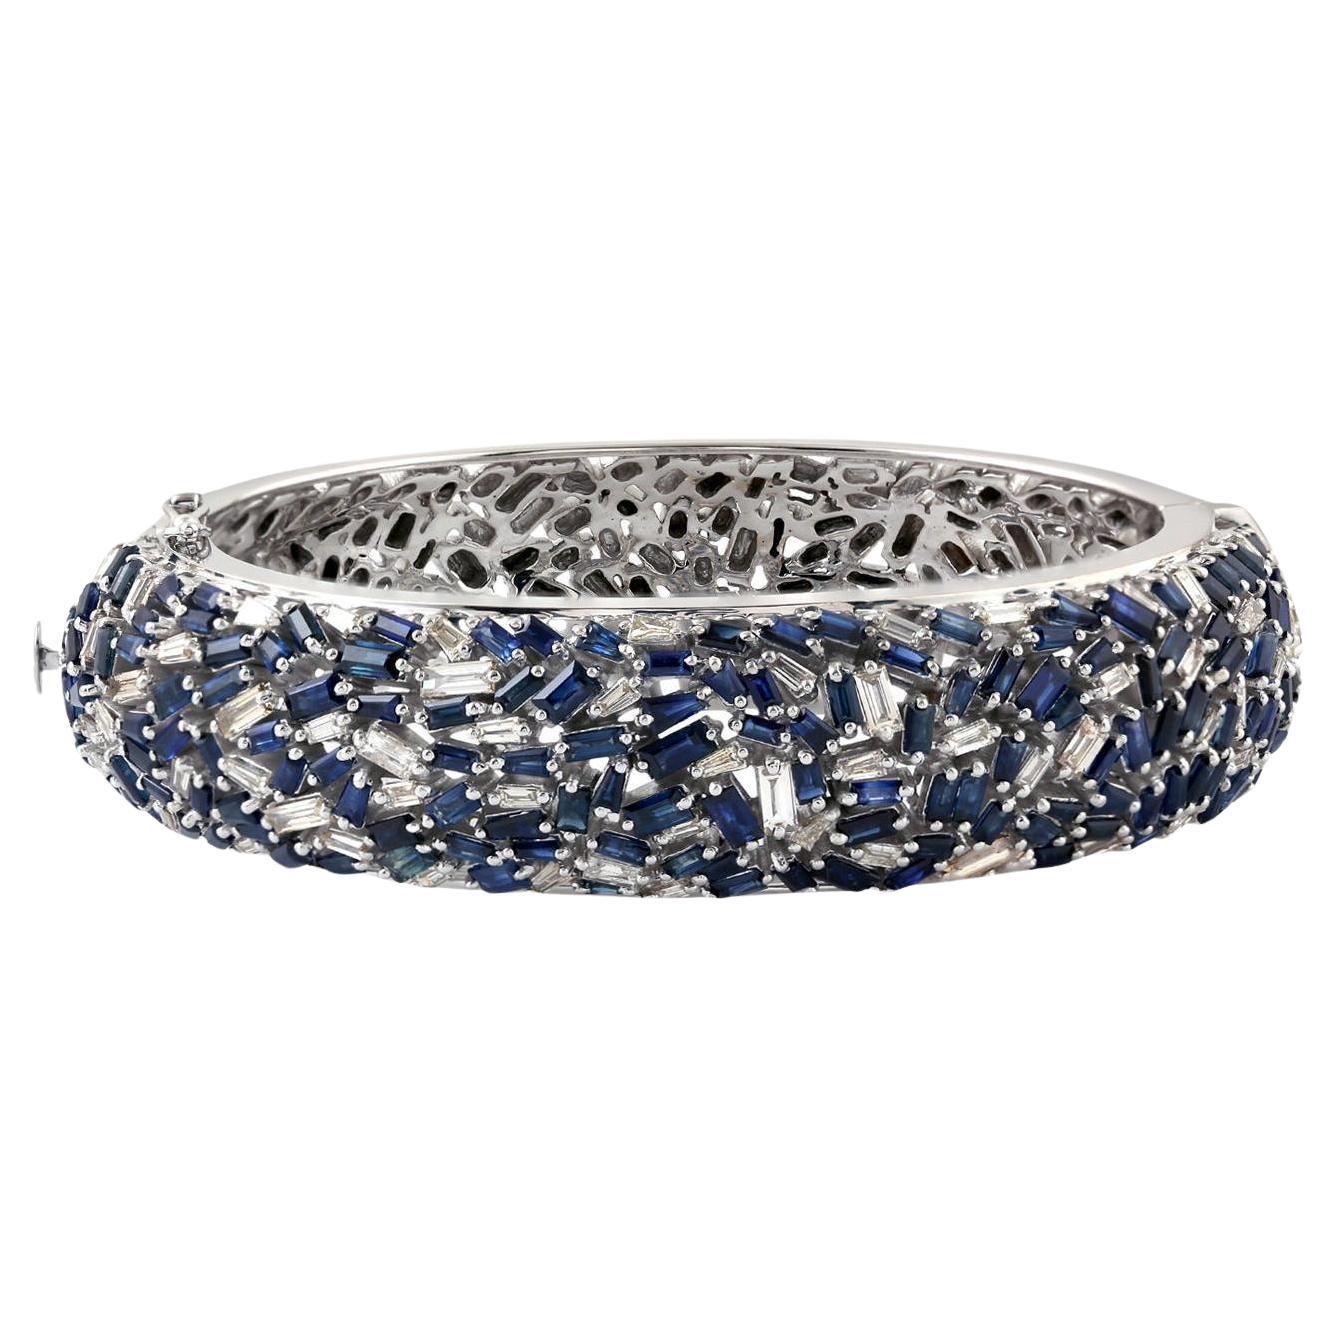 Natural Blue Sapphires and Diamonds Bracelet 14.50 Carats Total